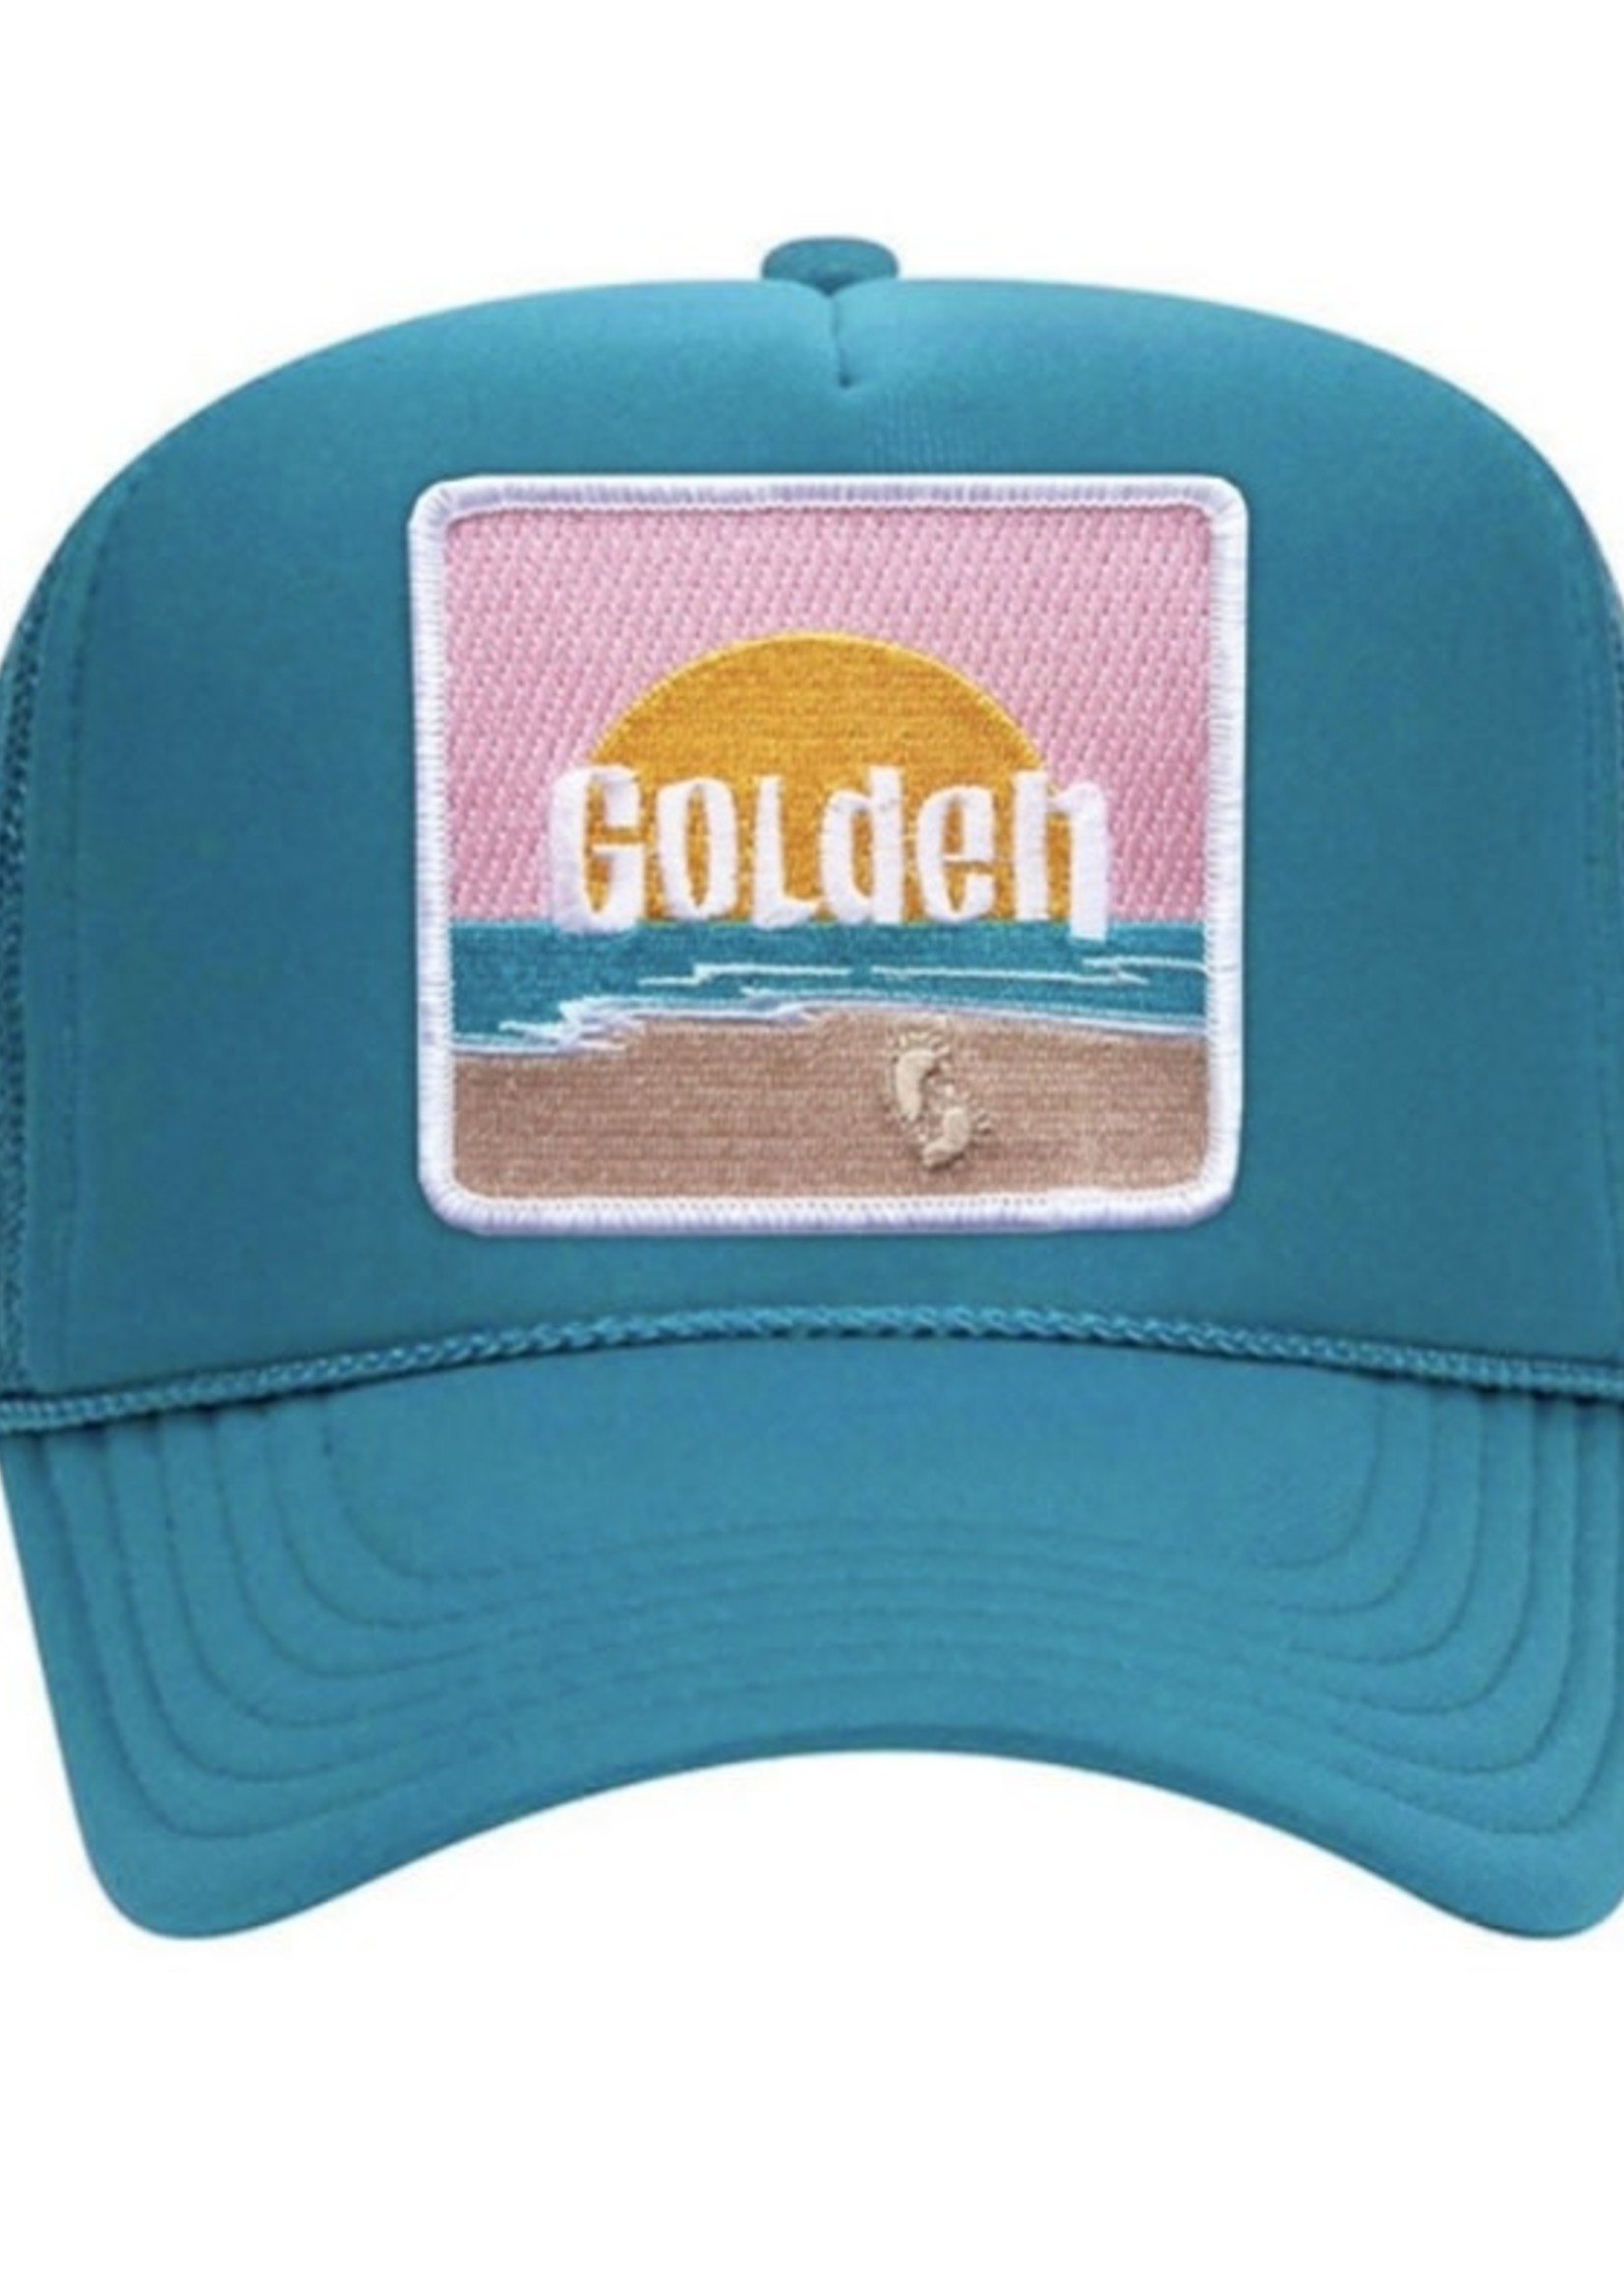 Port Sandz Golden trucker hat (carribean blue)